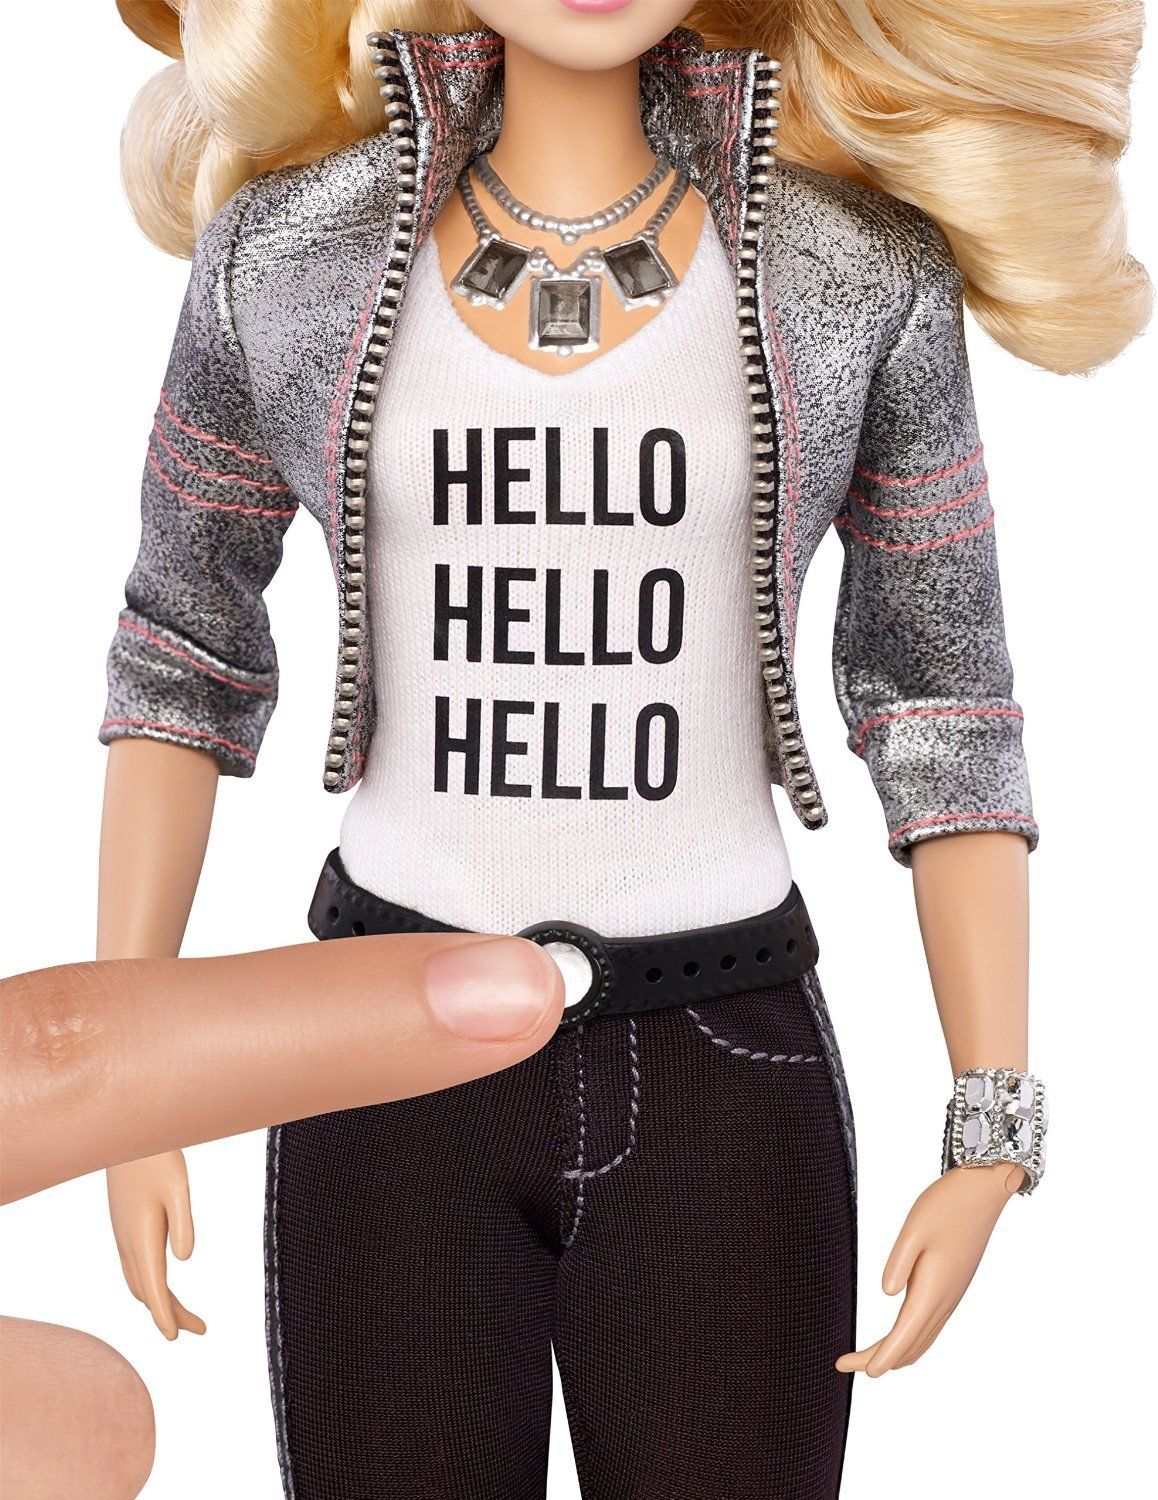 Blozend arm Odysseus ToyTalk: Internet Connected Barbie | Designs & Ideas on Dornob